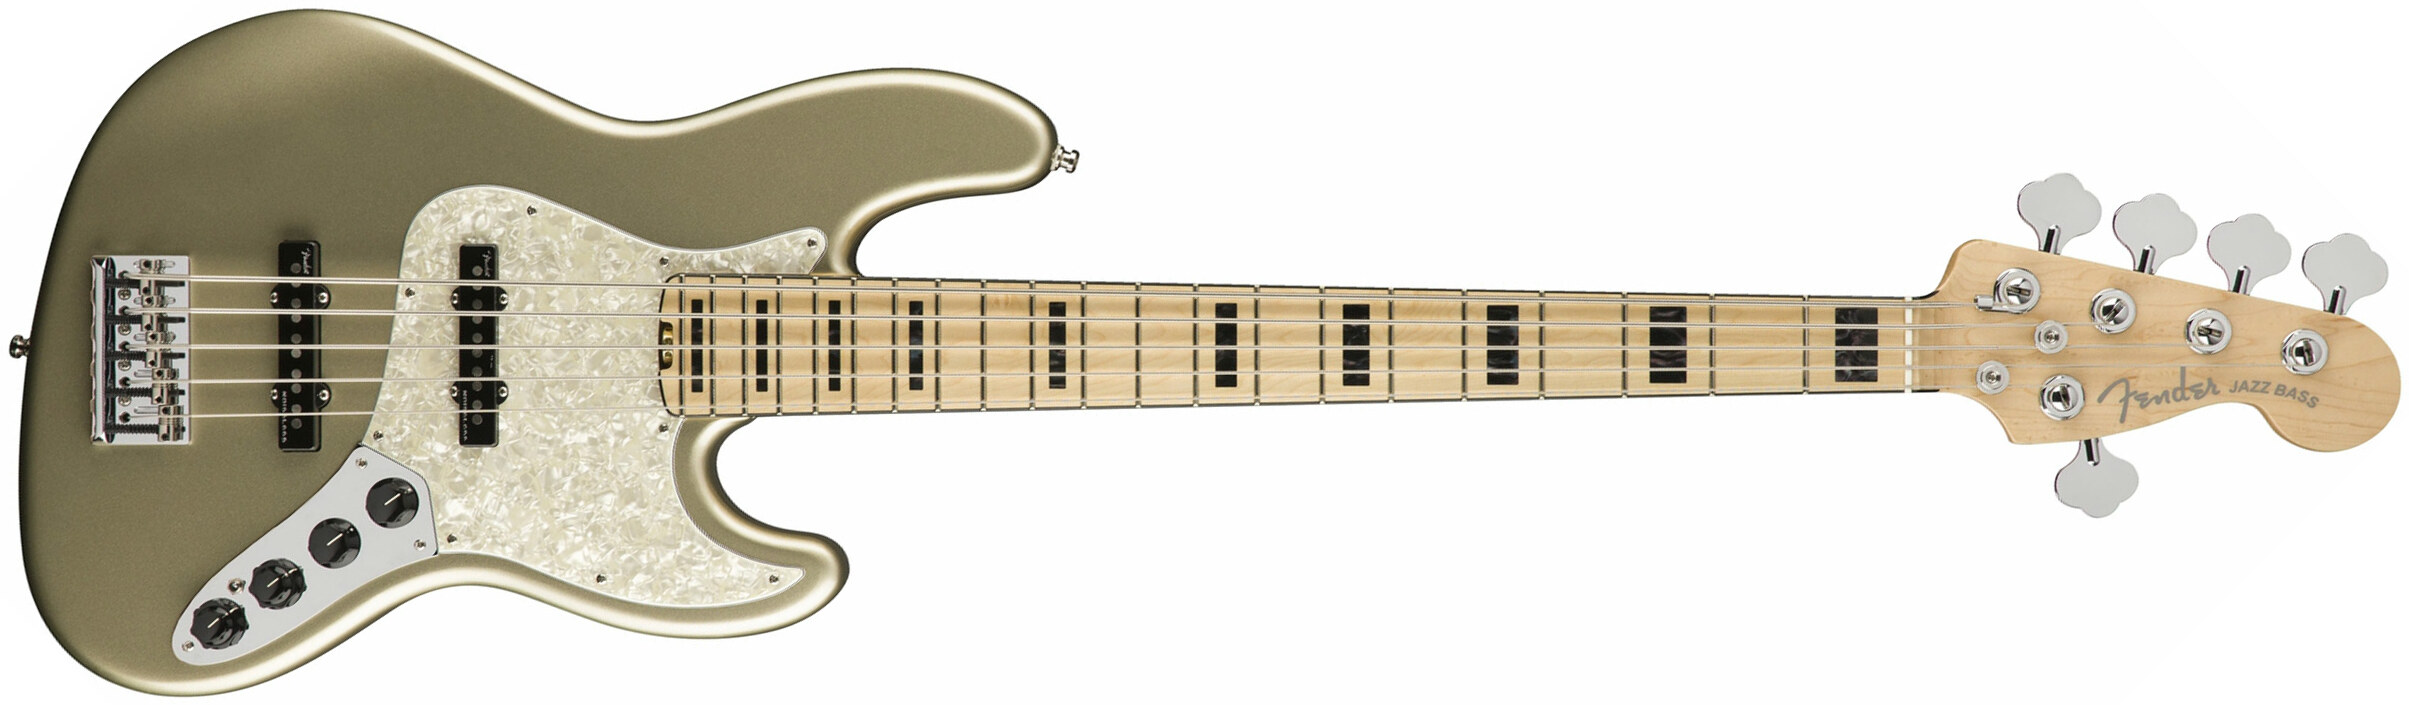 Fender American Elite Jazz Bass V Usa Mn - Champagne - Bajo eléctrico de cuerpo sólido - Main picture